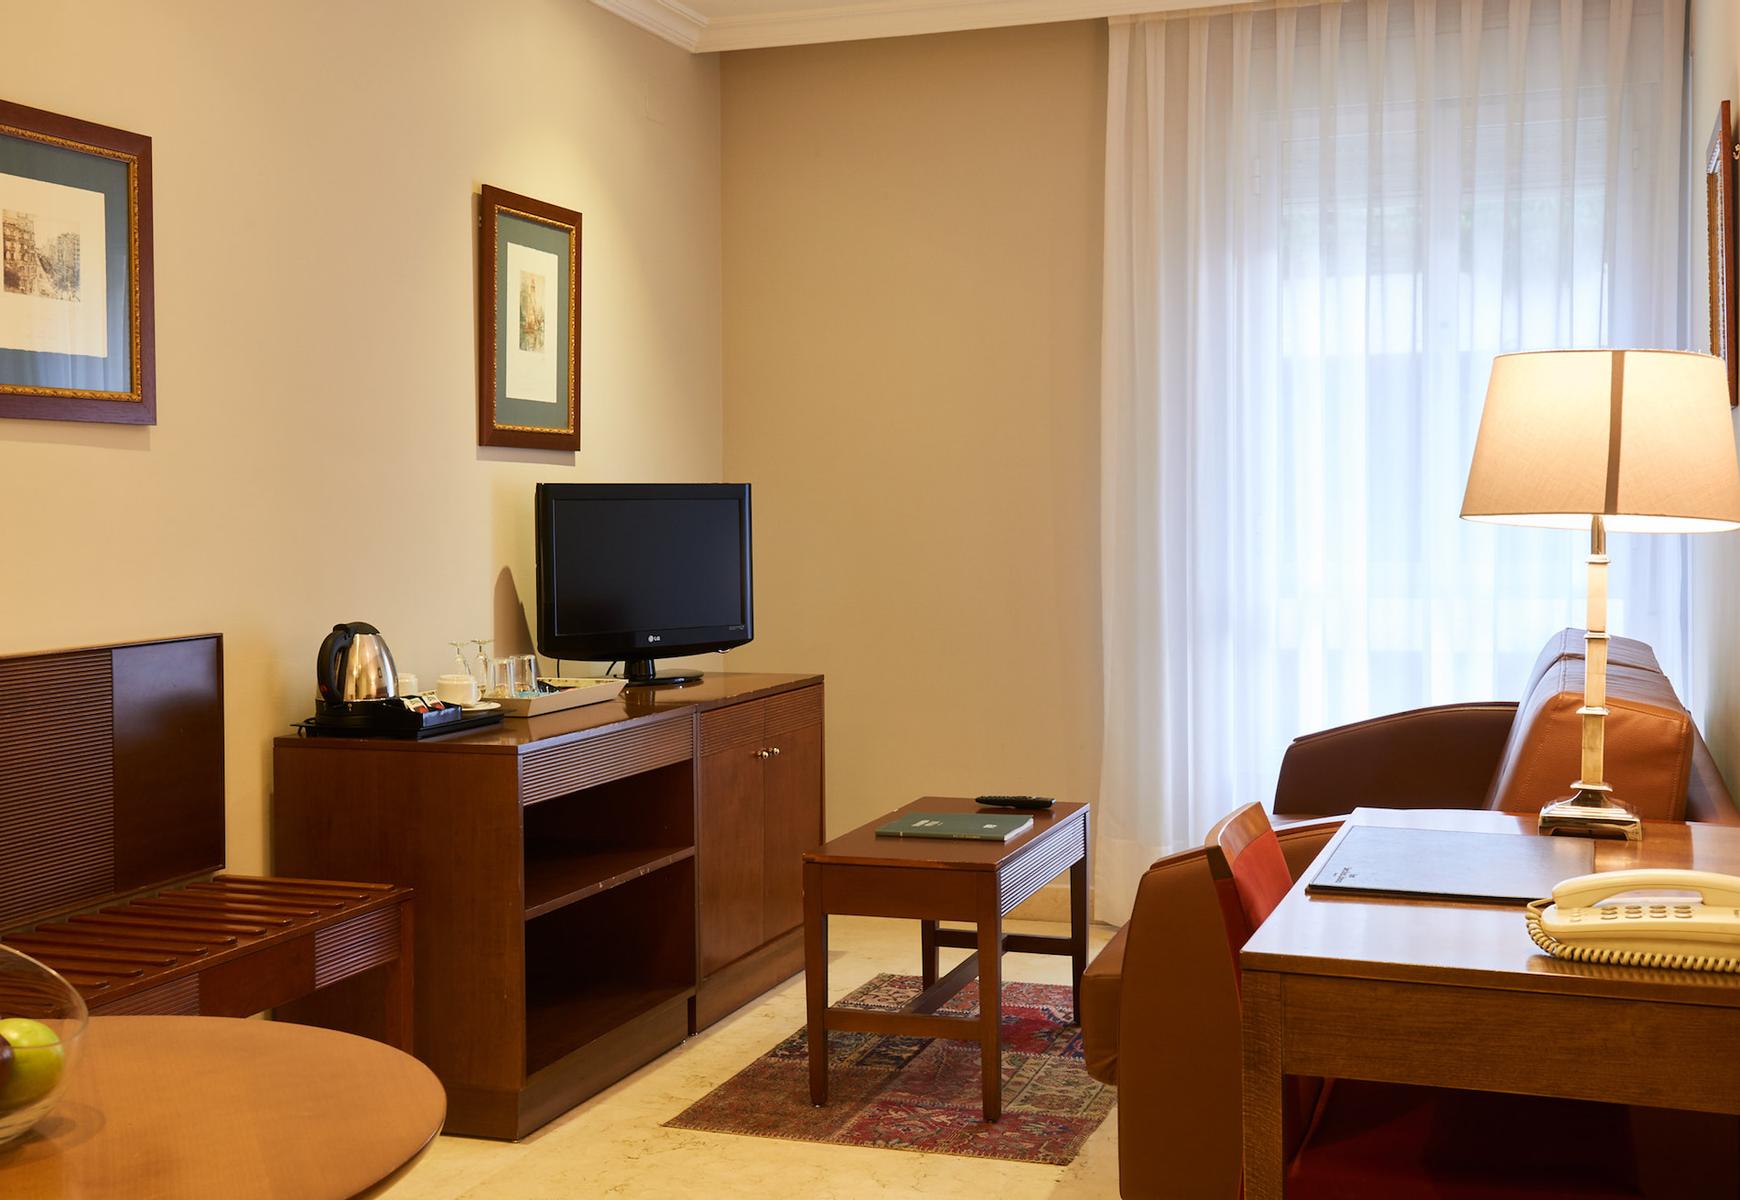 Hotel Suites Barrio de Salamanca | Madrid | Accommodation 05 - 2